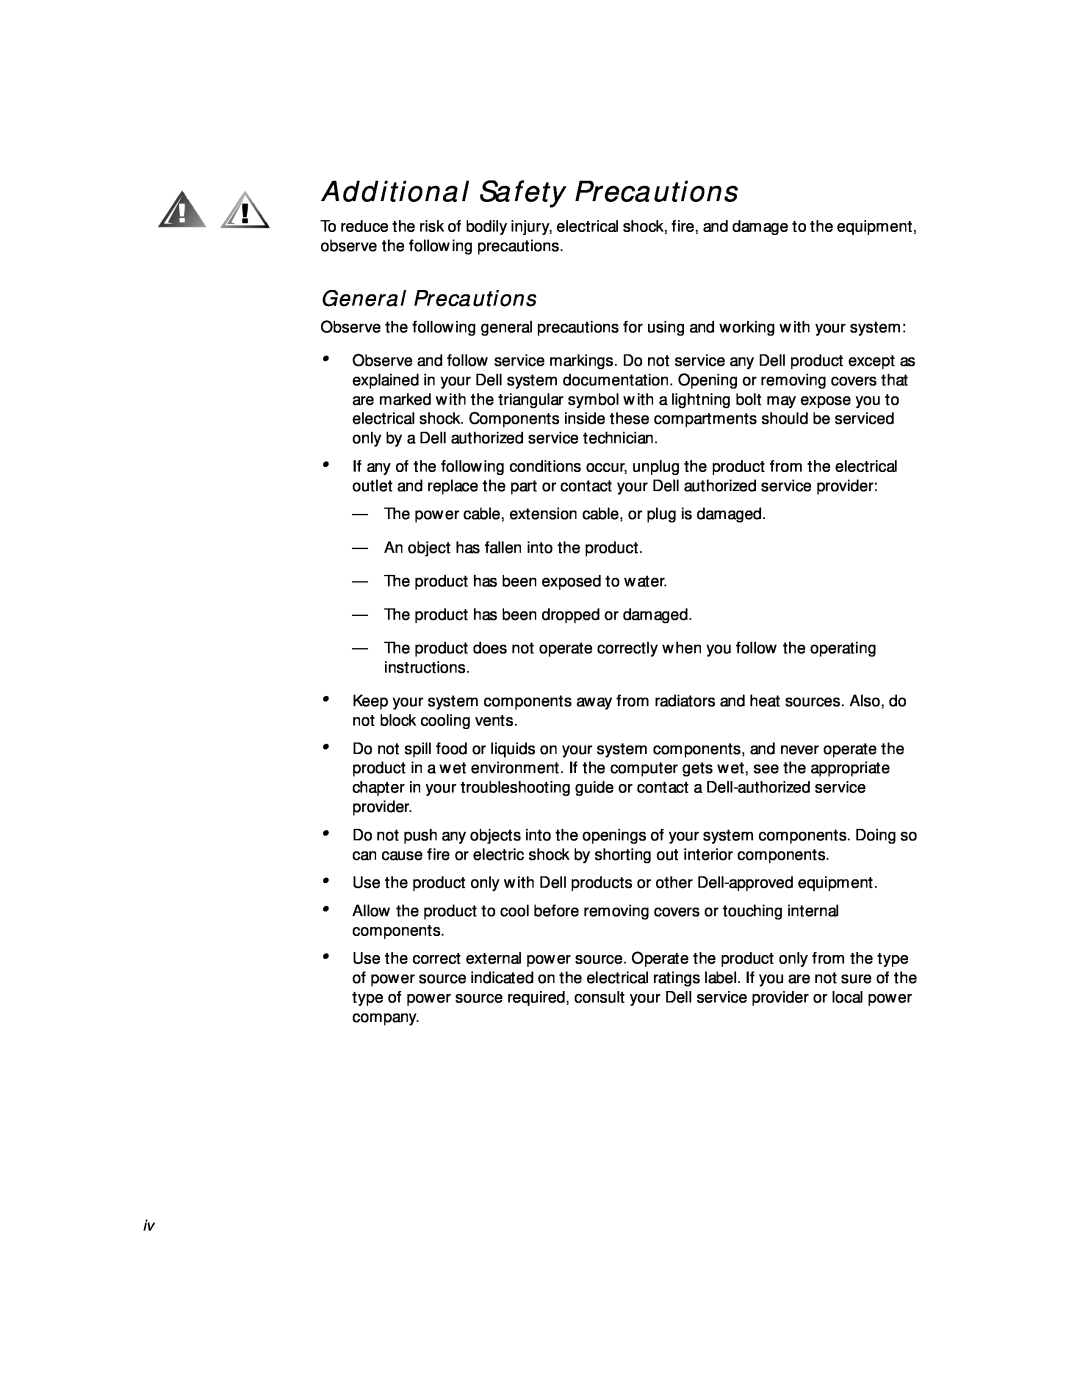 Dell 2400 manual Additional Safety Precautions, General Precautions 